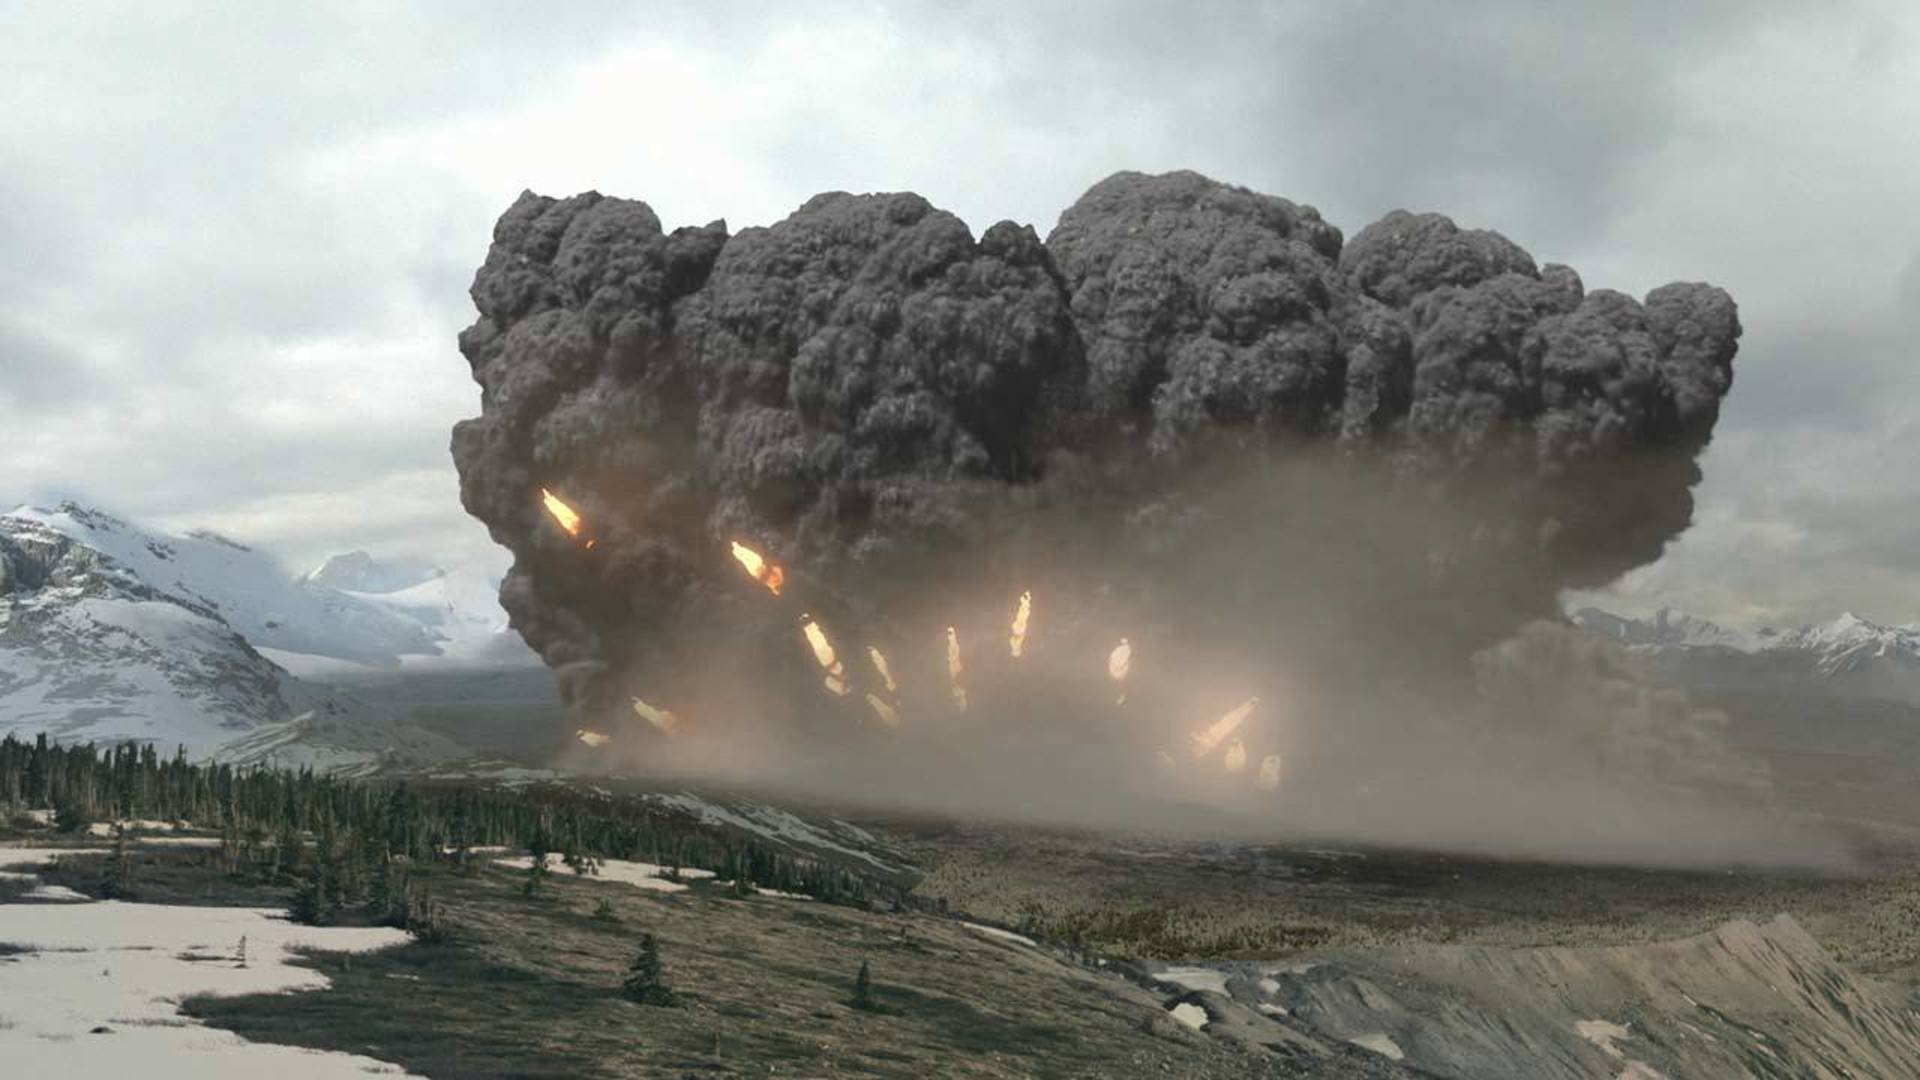 Какая самая сильная земля. Вулкан Йеллоустоун извержение. Вулкан Элстоун извердение. Супервулкан Йеллоустоун извержение. Извержение Йеллоустоун 2012.